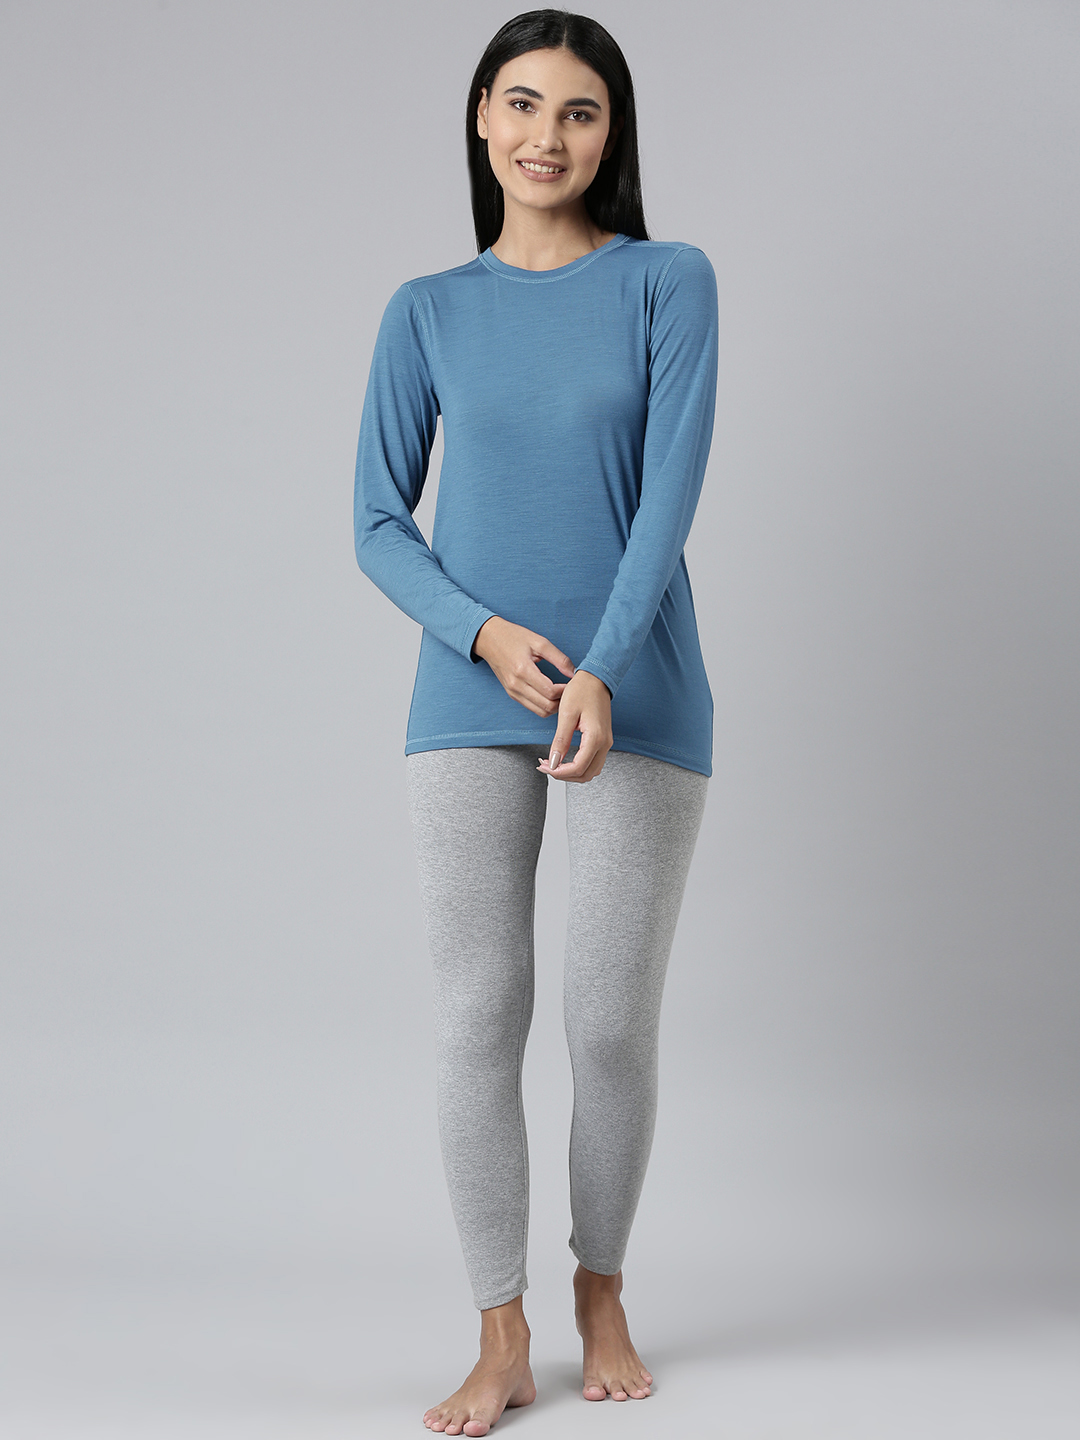 Kunzum Pastel Blue Merino wool, Bamboo & Polyester Full Sleeve Thermal Tee| Women | Snuggle Up With Free Woollen Socks